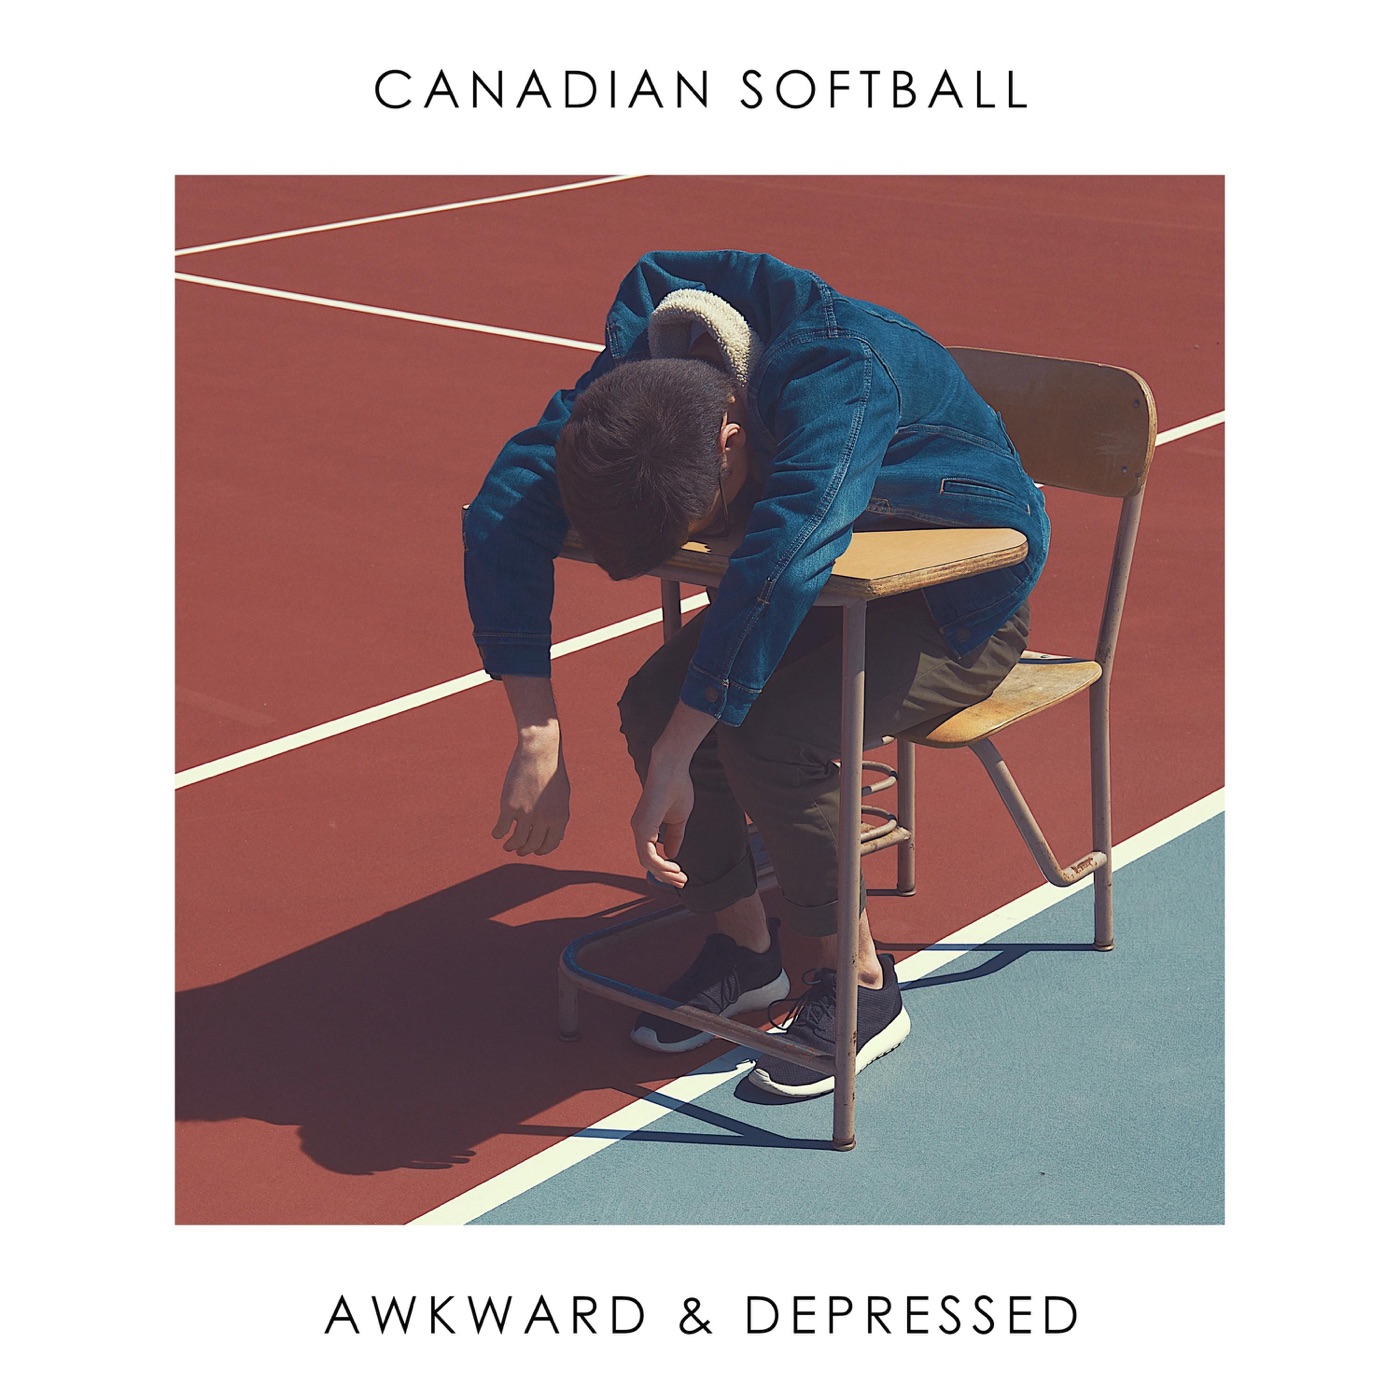 Awkward & Depressed by Canadian Softball